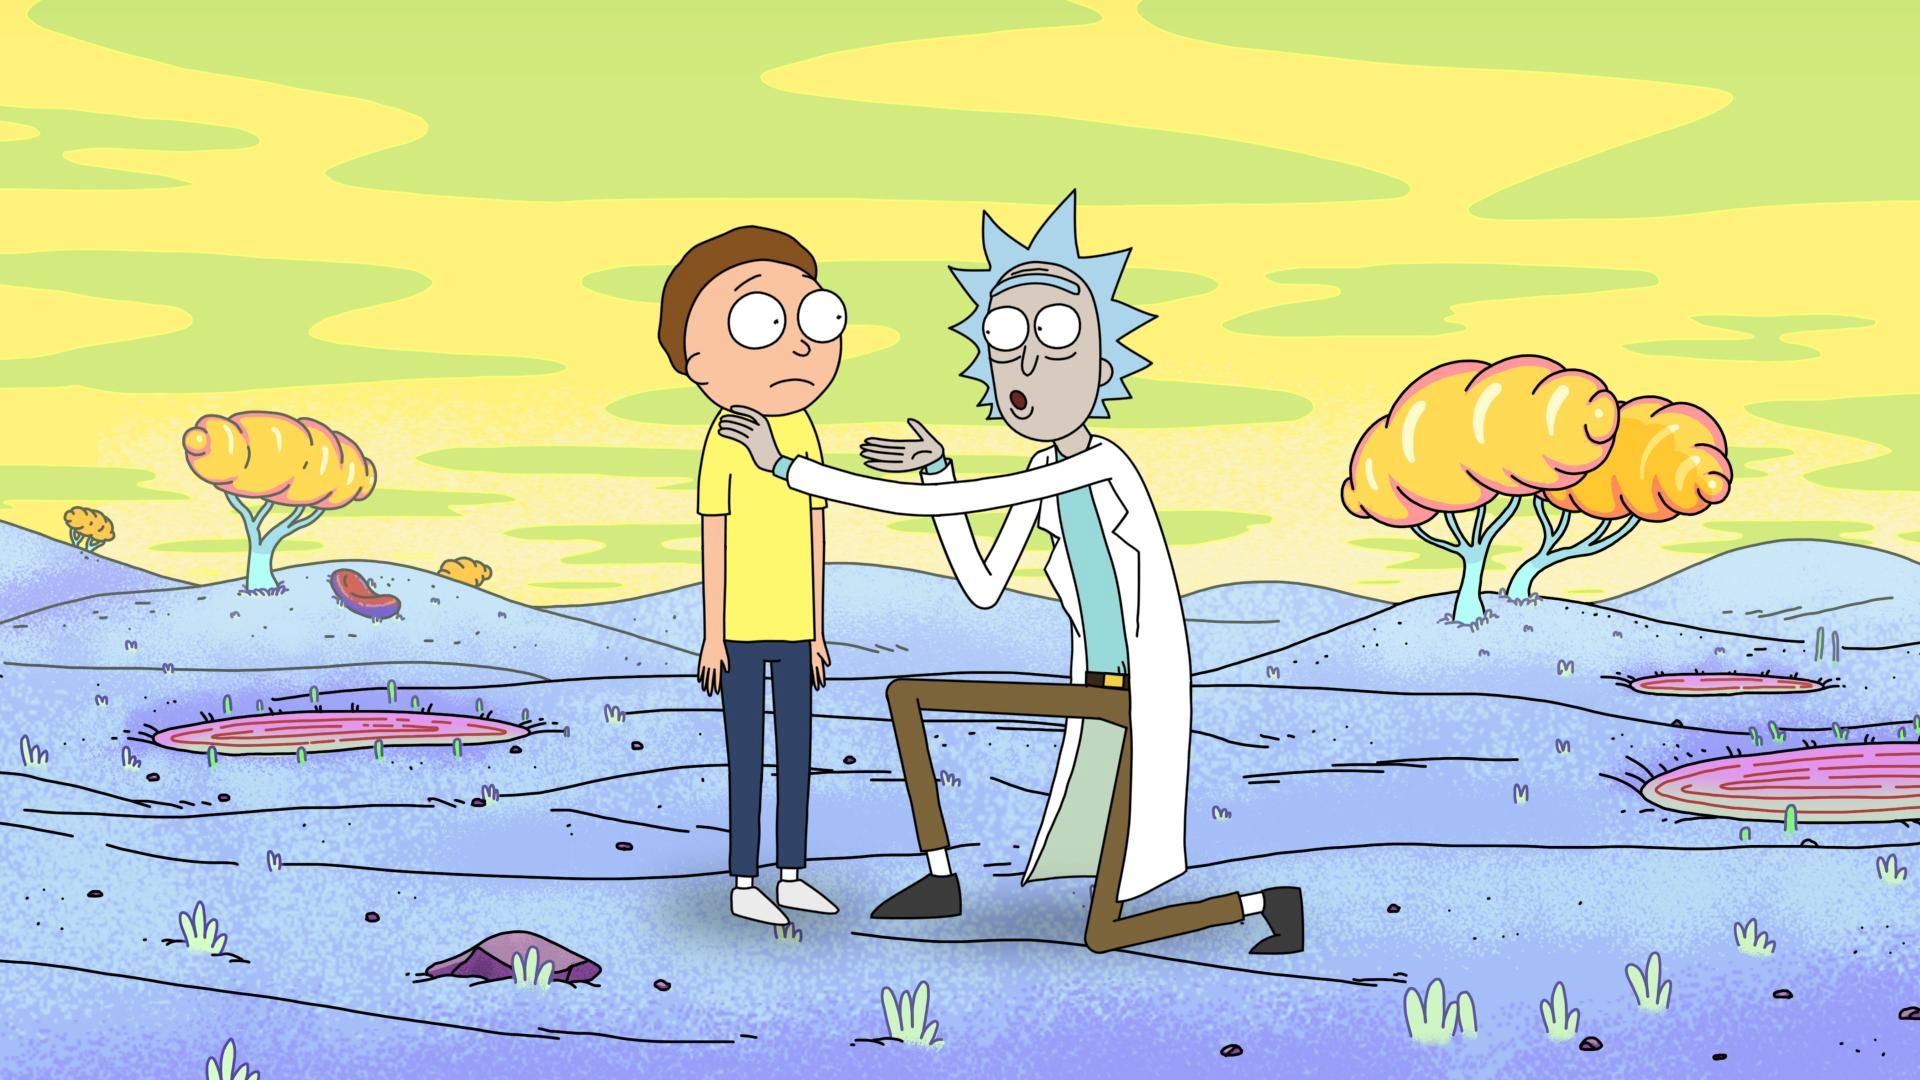 Rick and Morty Pilot